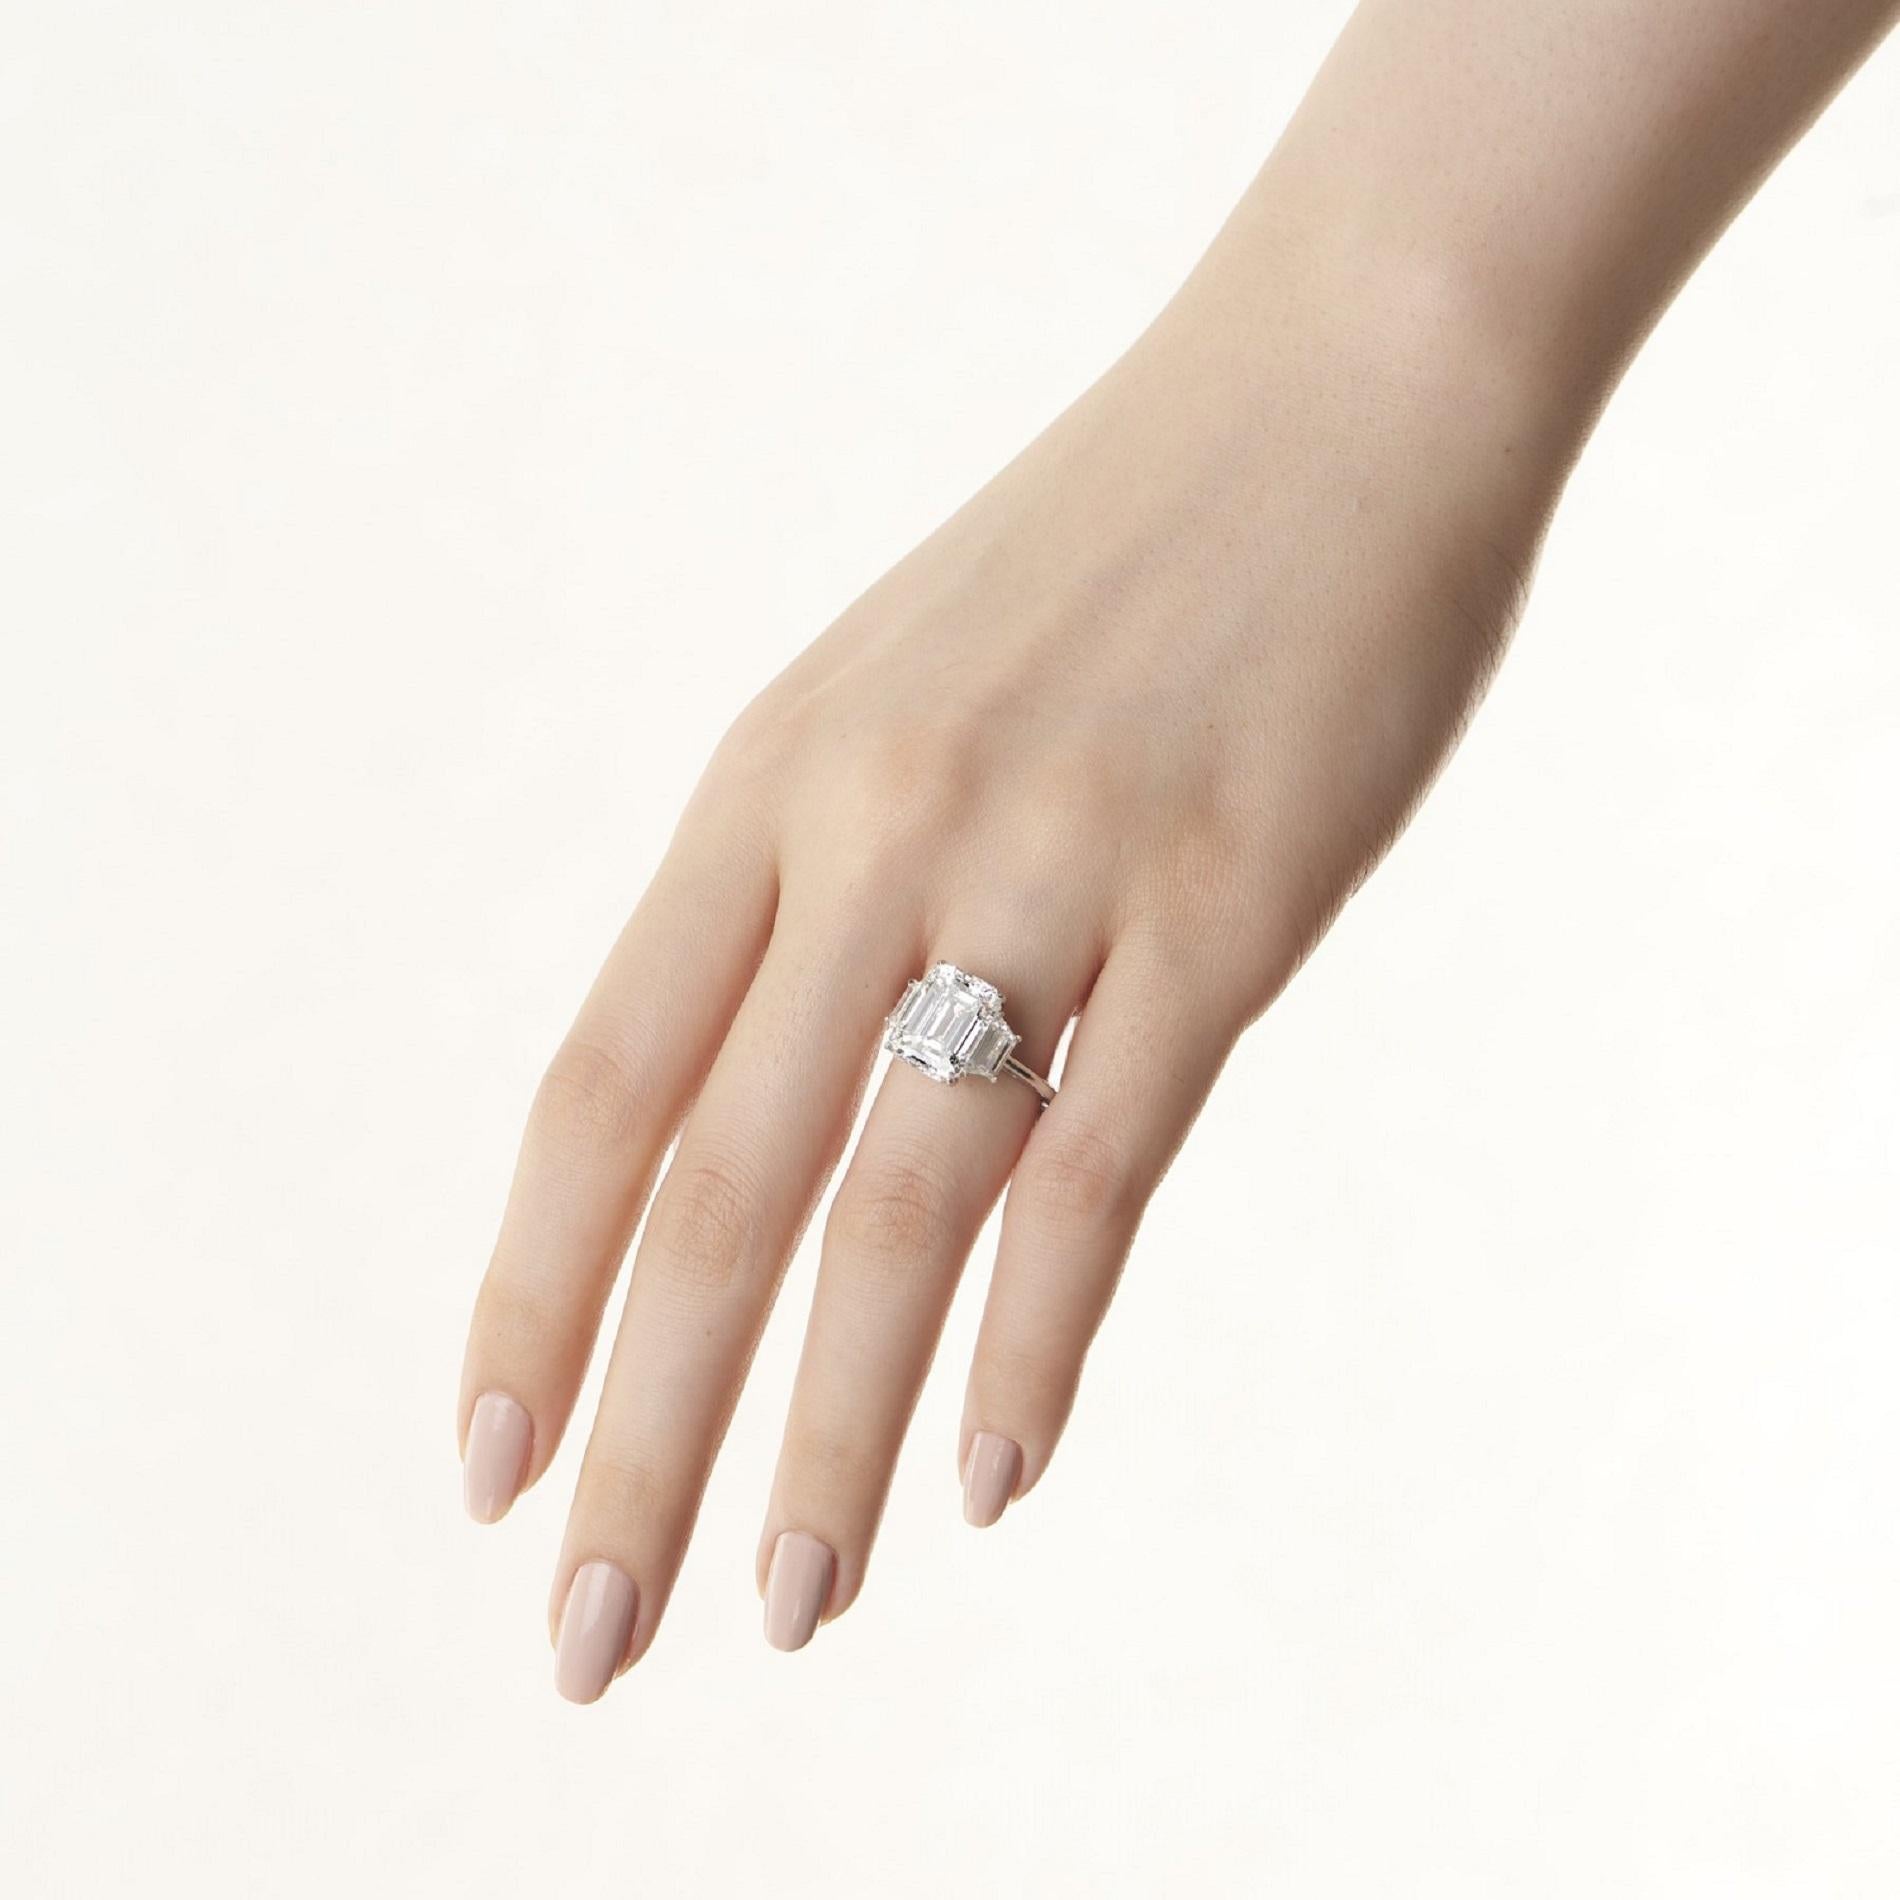 5 carat emerald cut diamond ring price